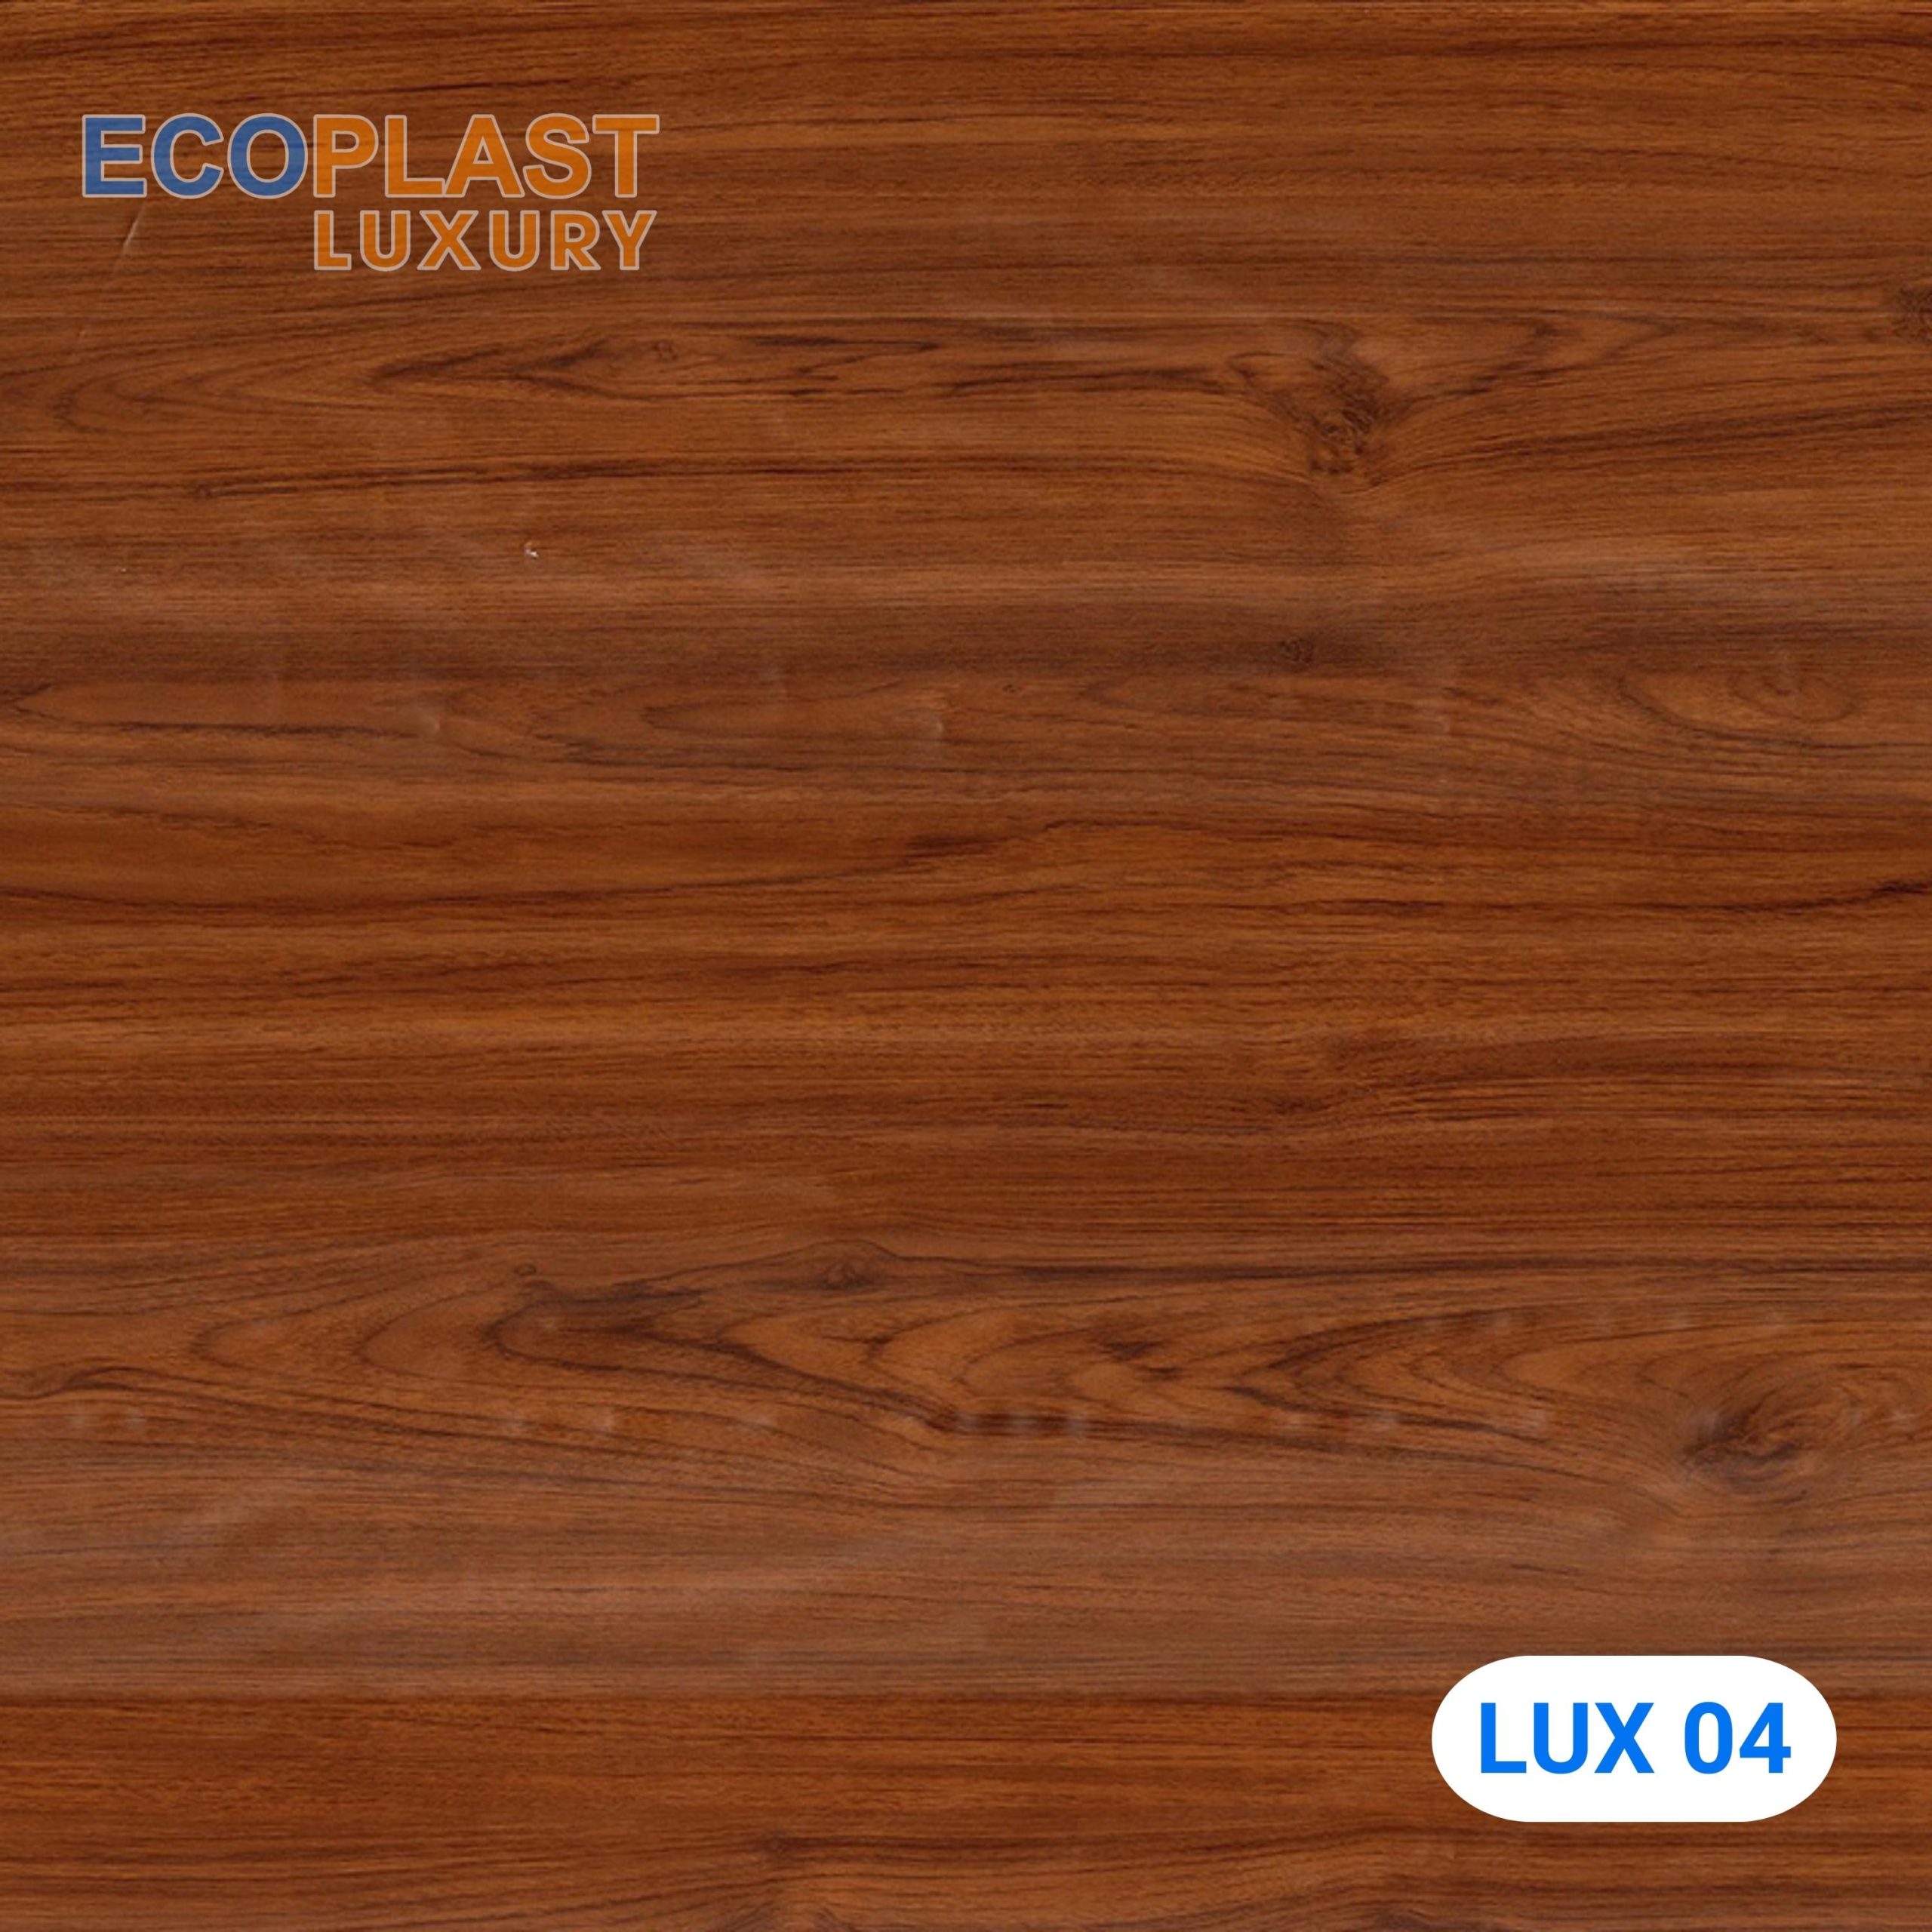 Mã màu tấm nhựa nội thất Ecoplast Lux 04